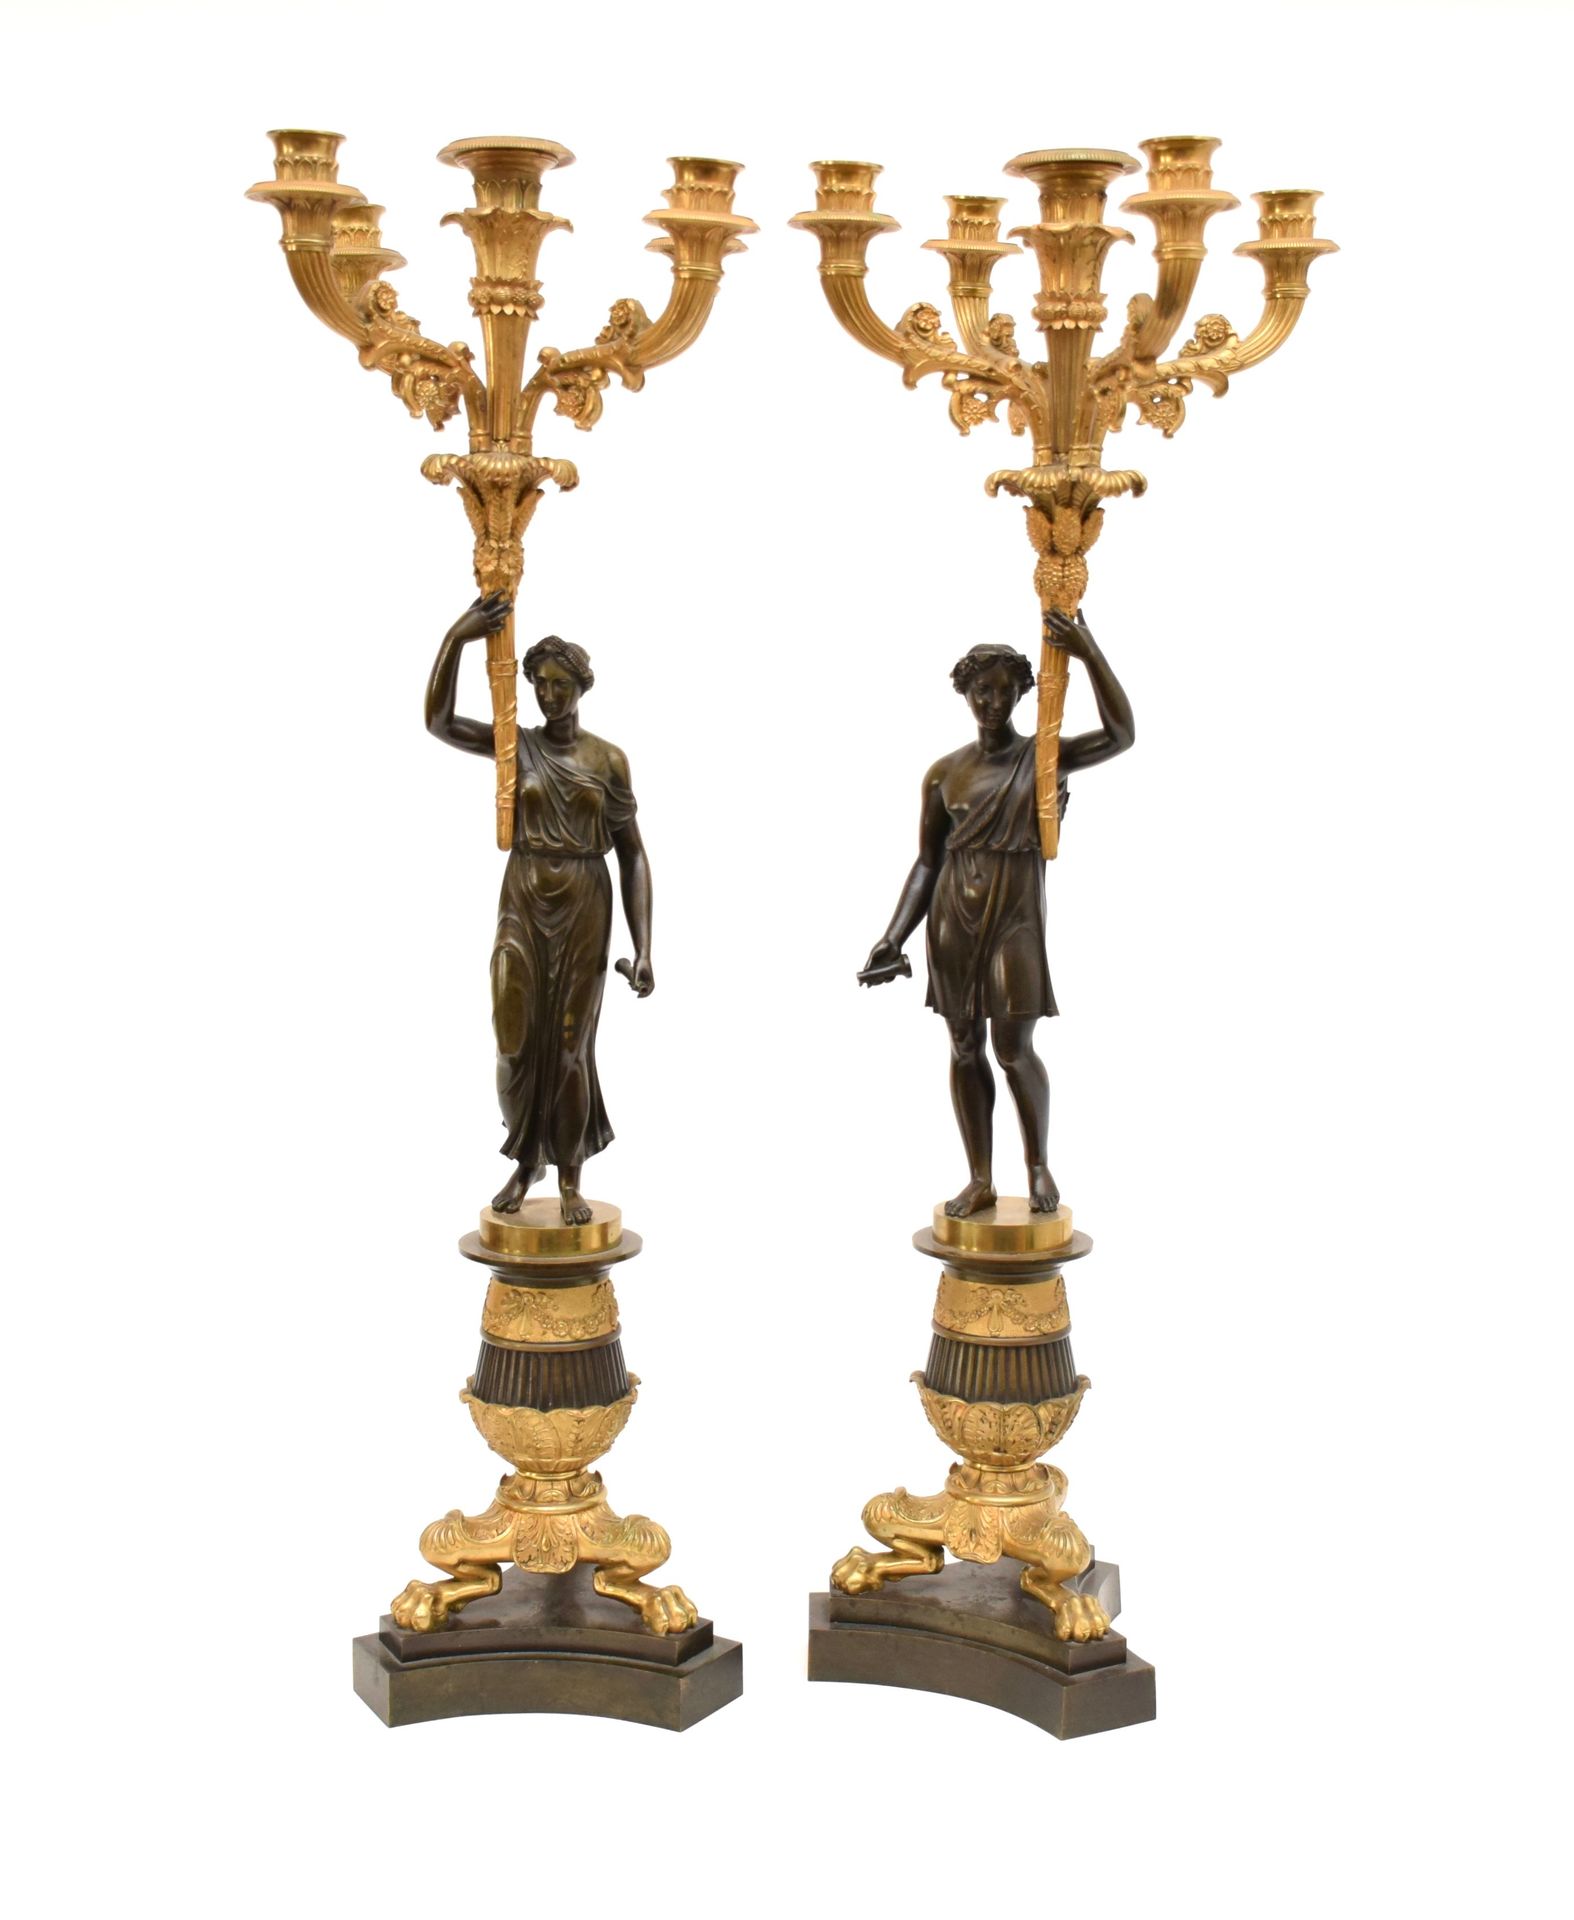 Null 一对烛台

 鎏金青铜器，有斑驳和凹凸不平的五条光臂，由一个古董人物支撑，有三个爪子脚，放在黑色大理石底座上。

帝国-复兴时期风格

高度：72.5&hellip;